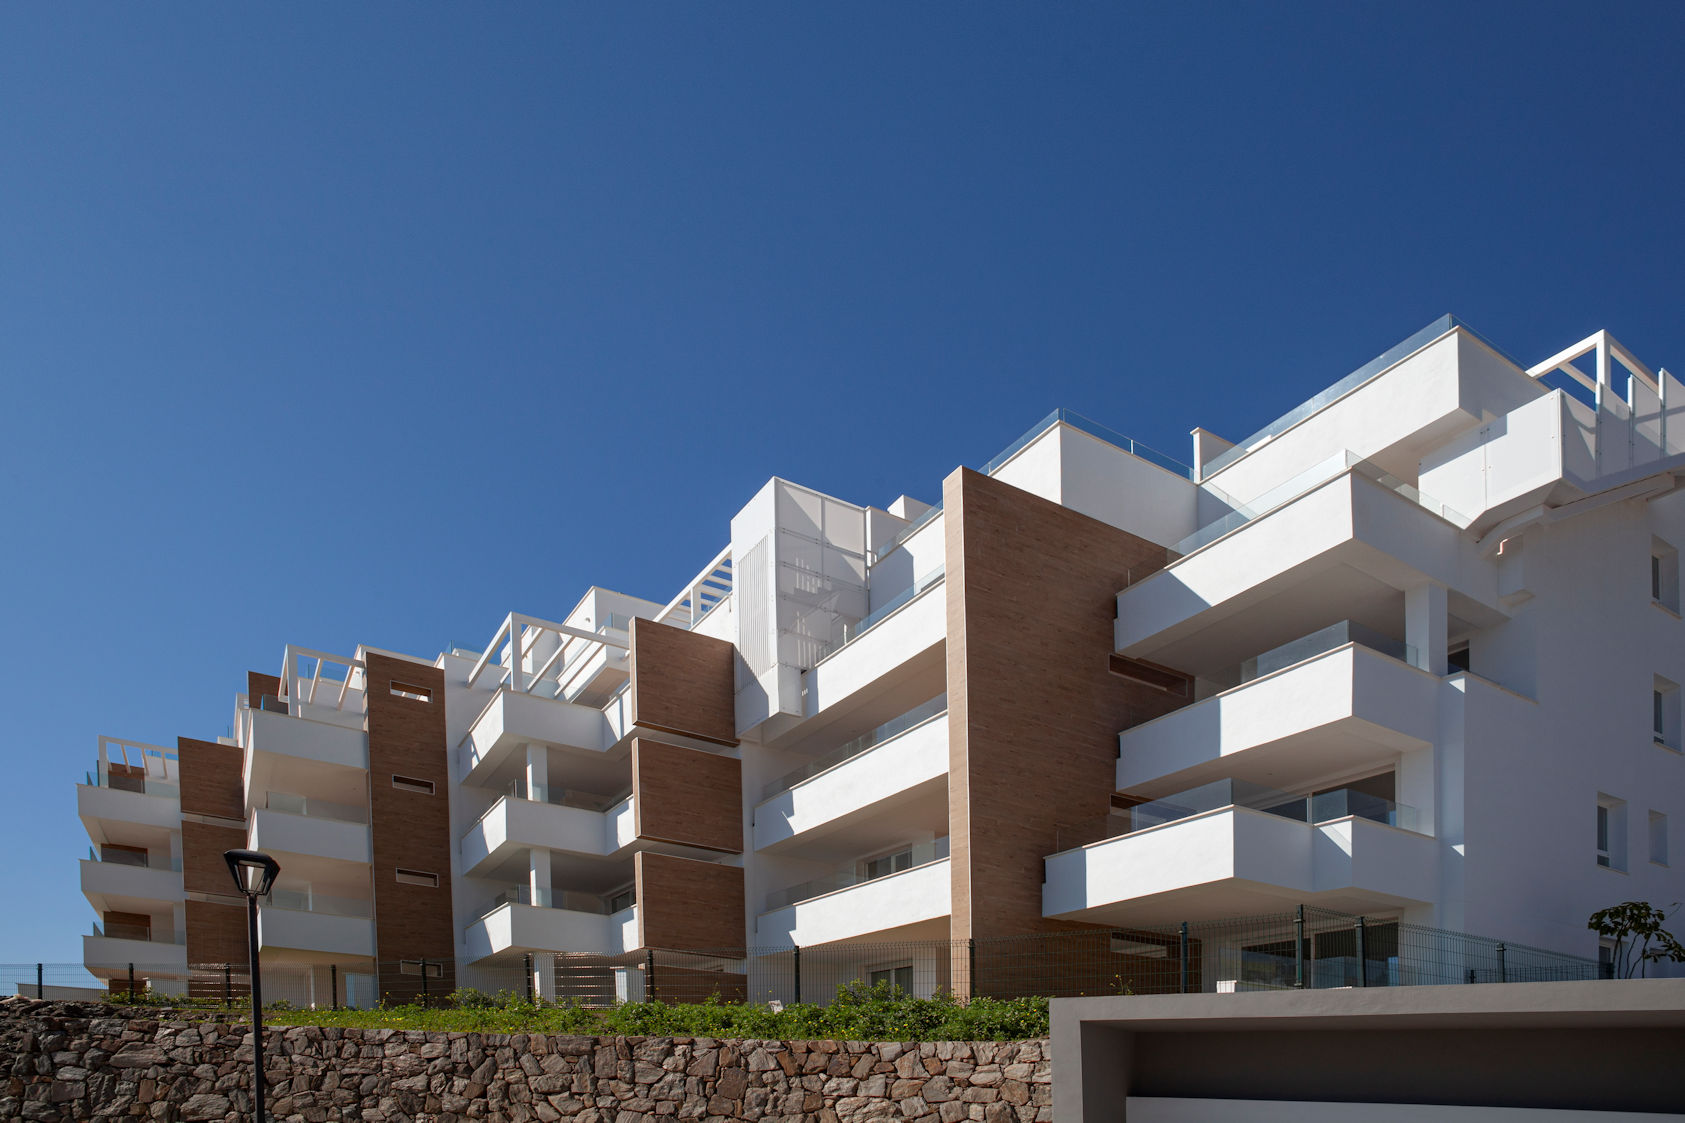 Luxury apartments under construction between Torrox Costa and Nerja


